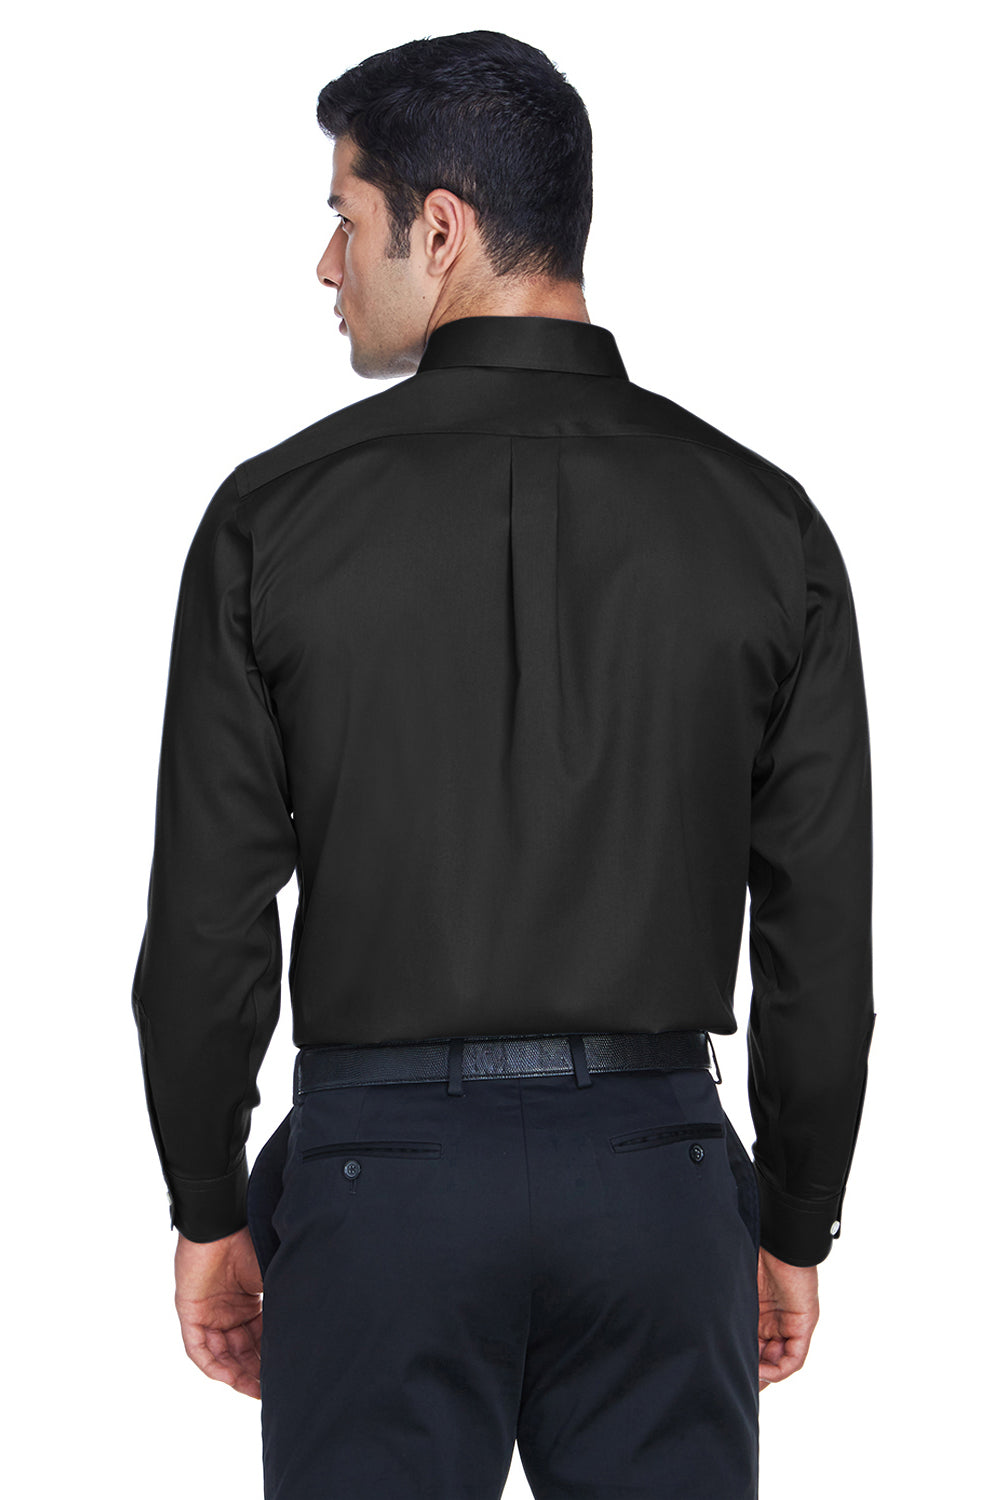 Devon & Jones DG530 Mens Crown Woven Collection Wrinkle Resistant Long Sleeve Button Down Shirt w/ Pocket Black Back